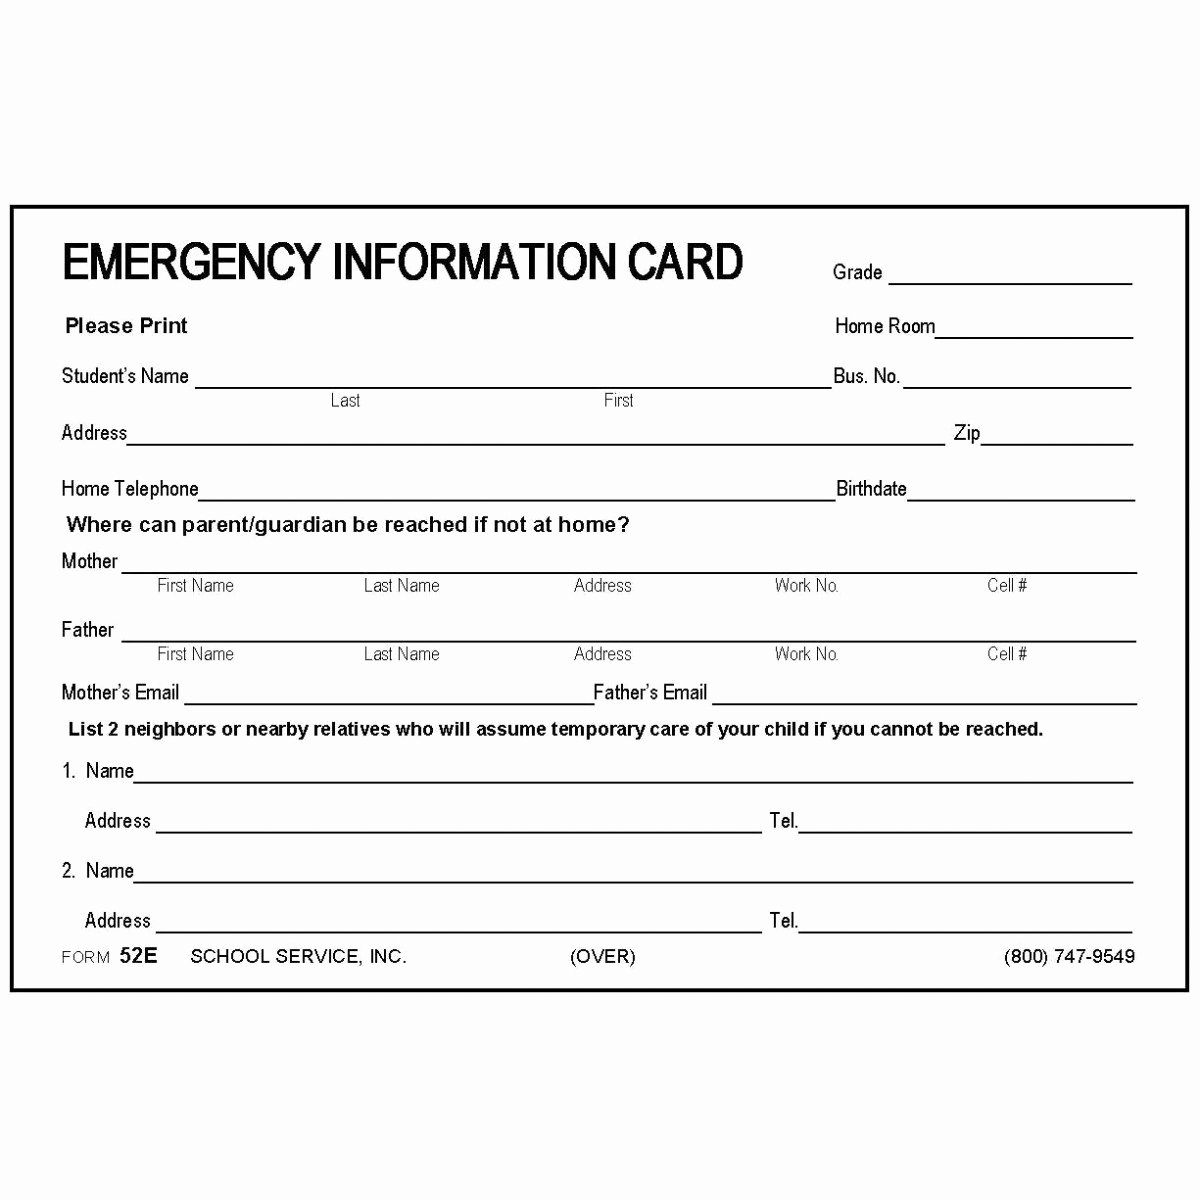 Emergency Information Card Template Elegant 52e Emergency Information Card 4 X 6 Size